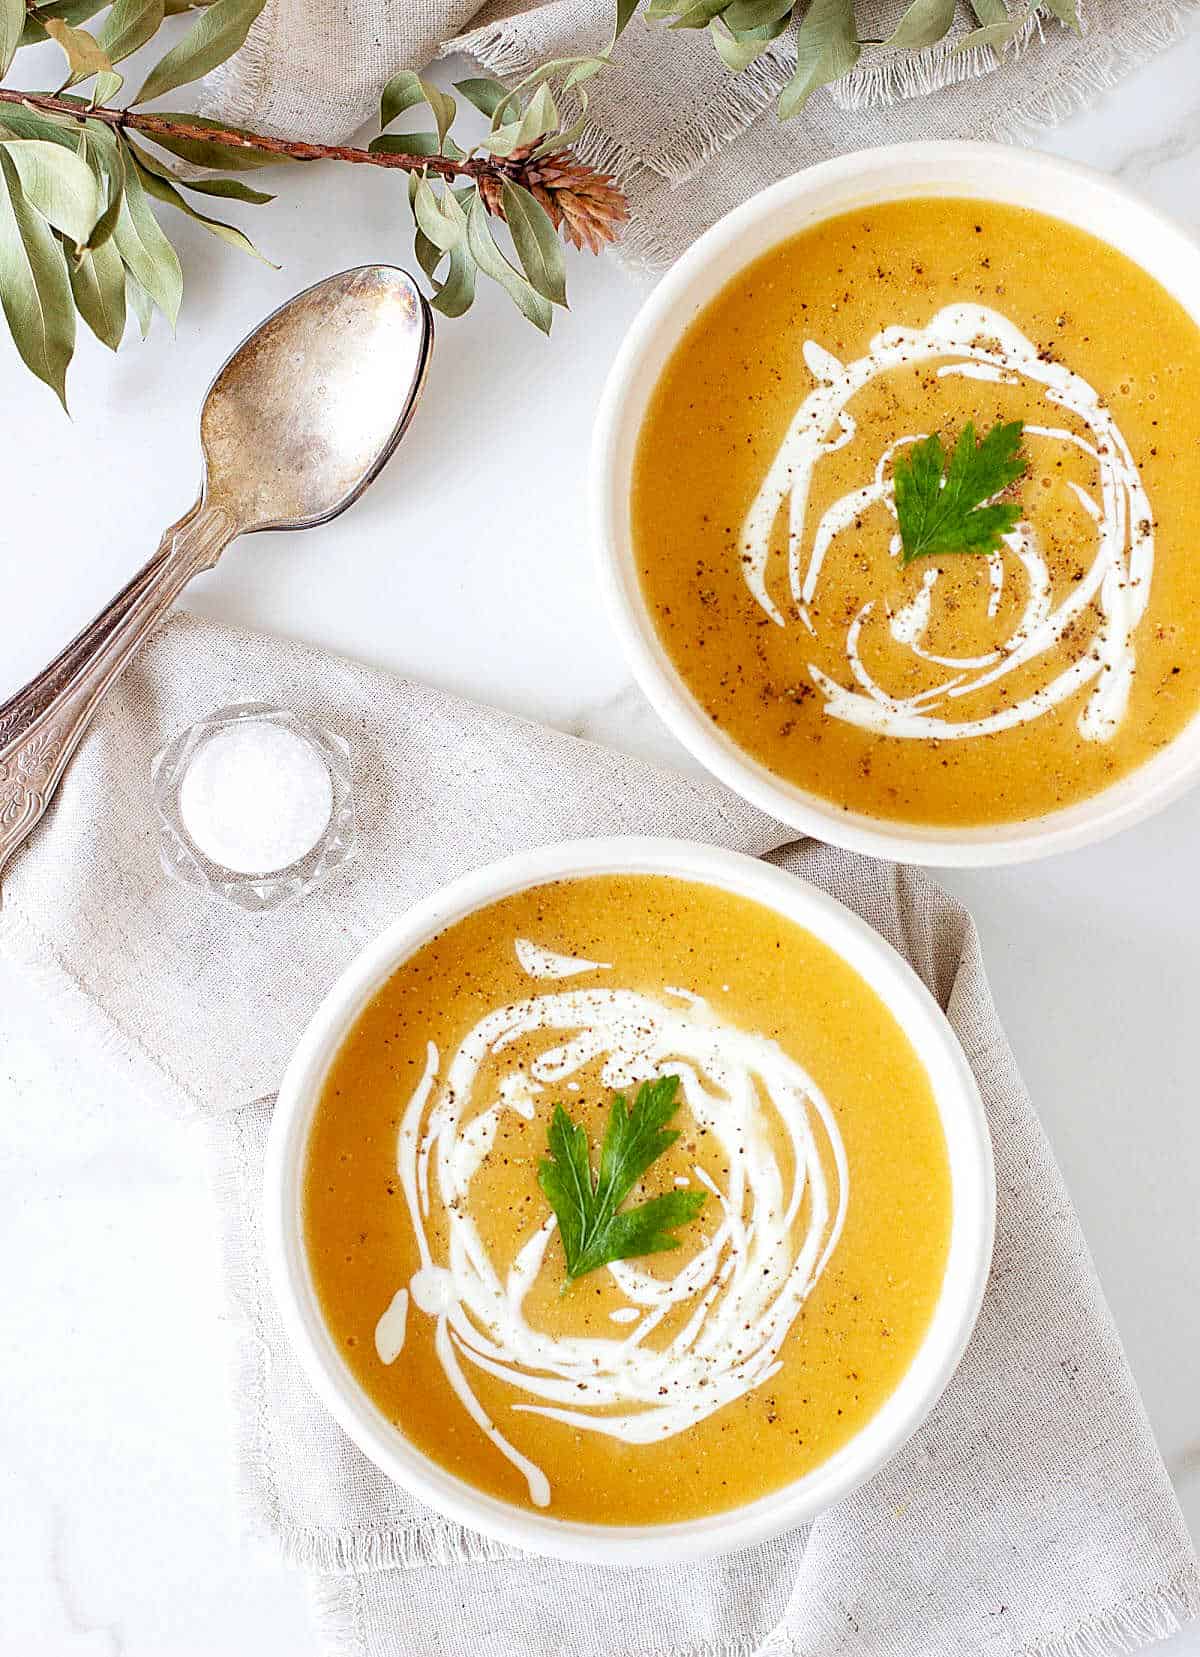 Two white bowls of orange soup, white background, spoons, salt.